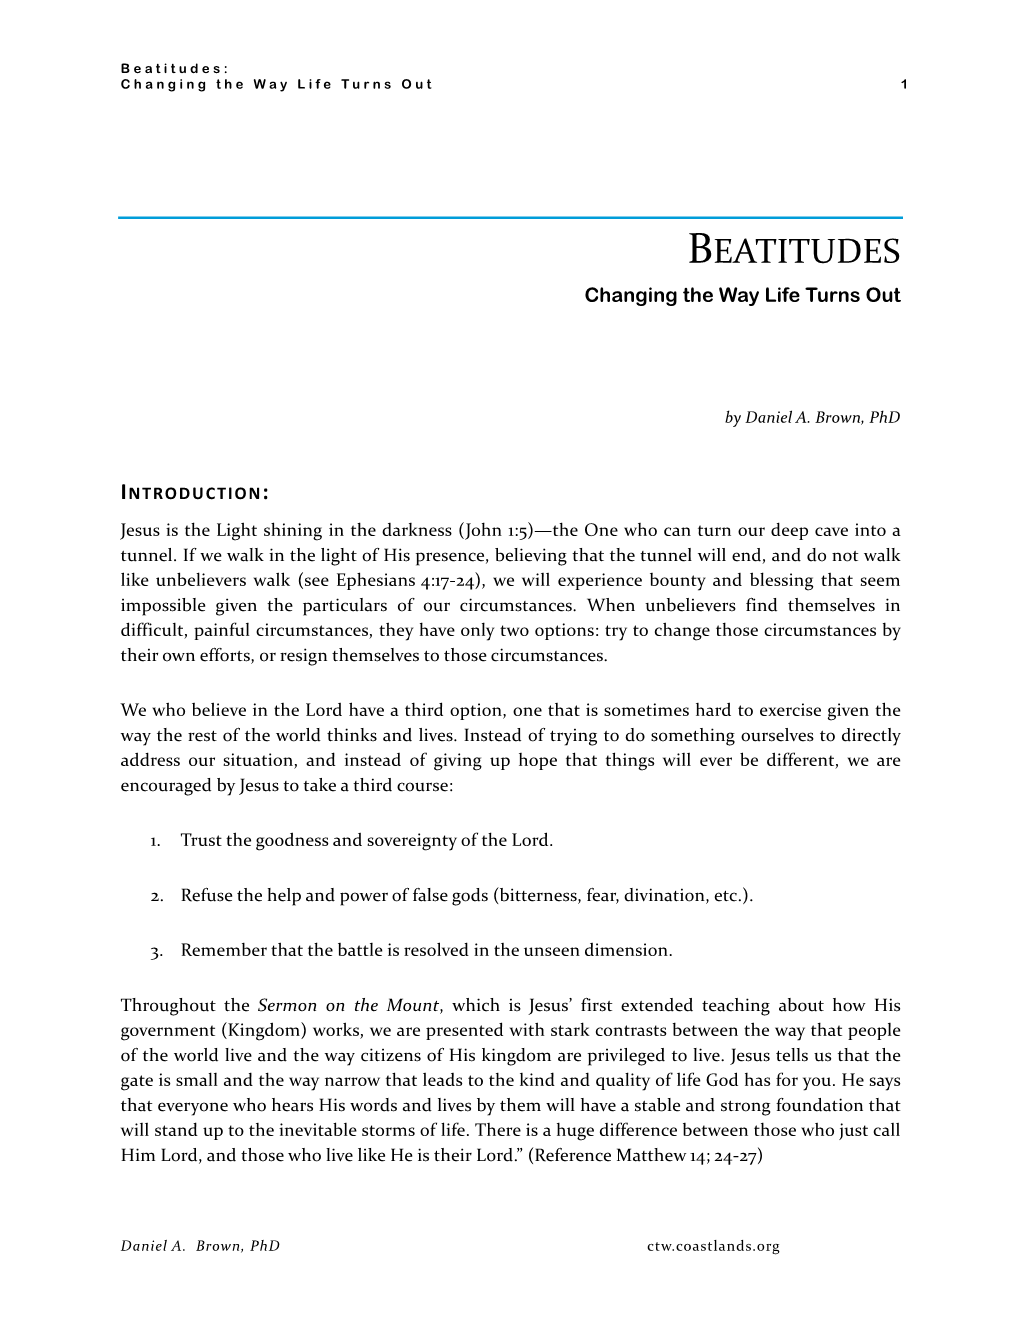 Beatitudes—Changing the Way Life Turns